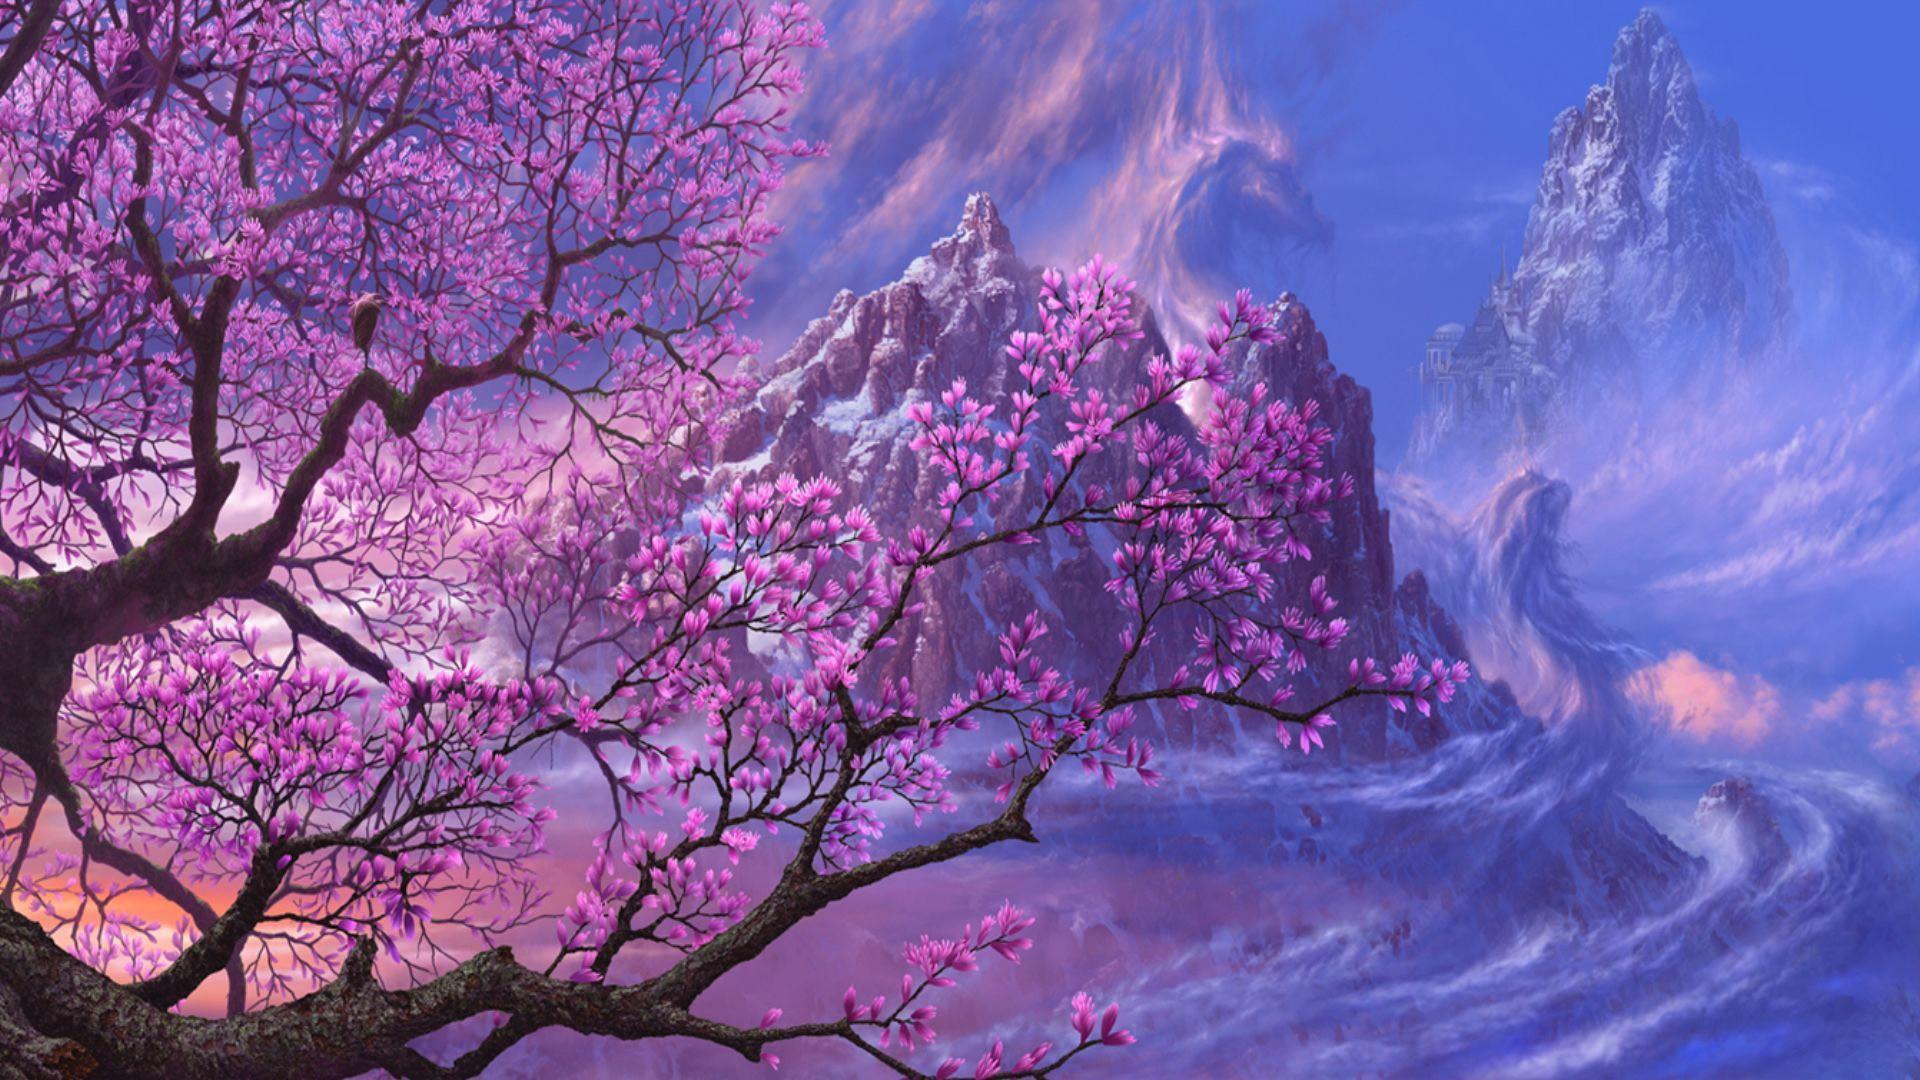 Anime Artwork Asia Dragons Fantasy Art Purple Trees Wallpaper and Free